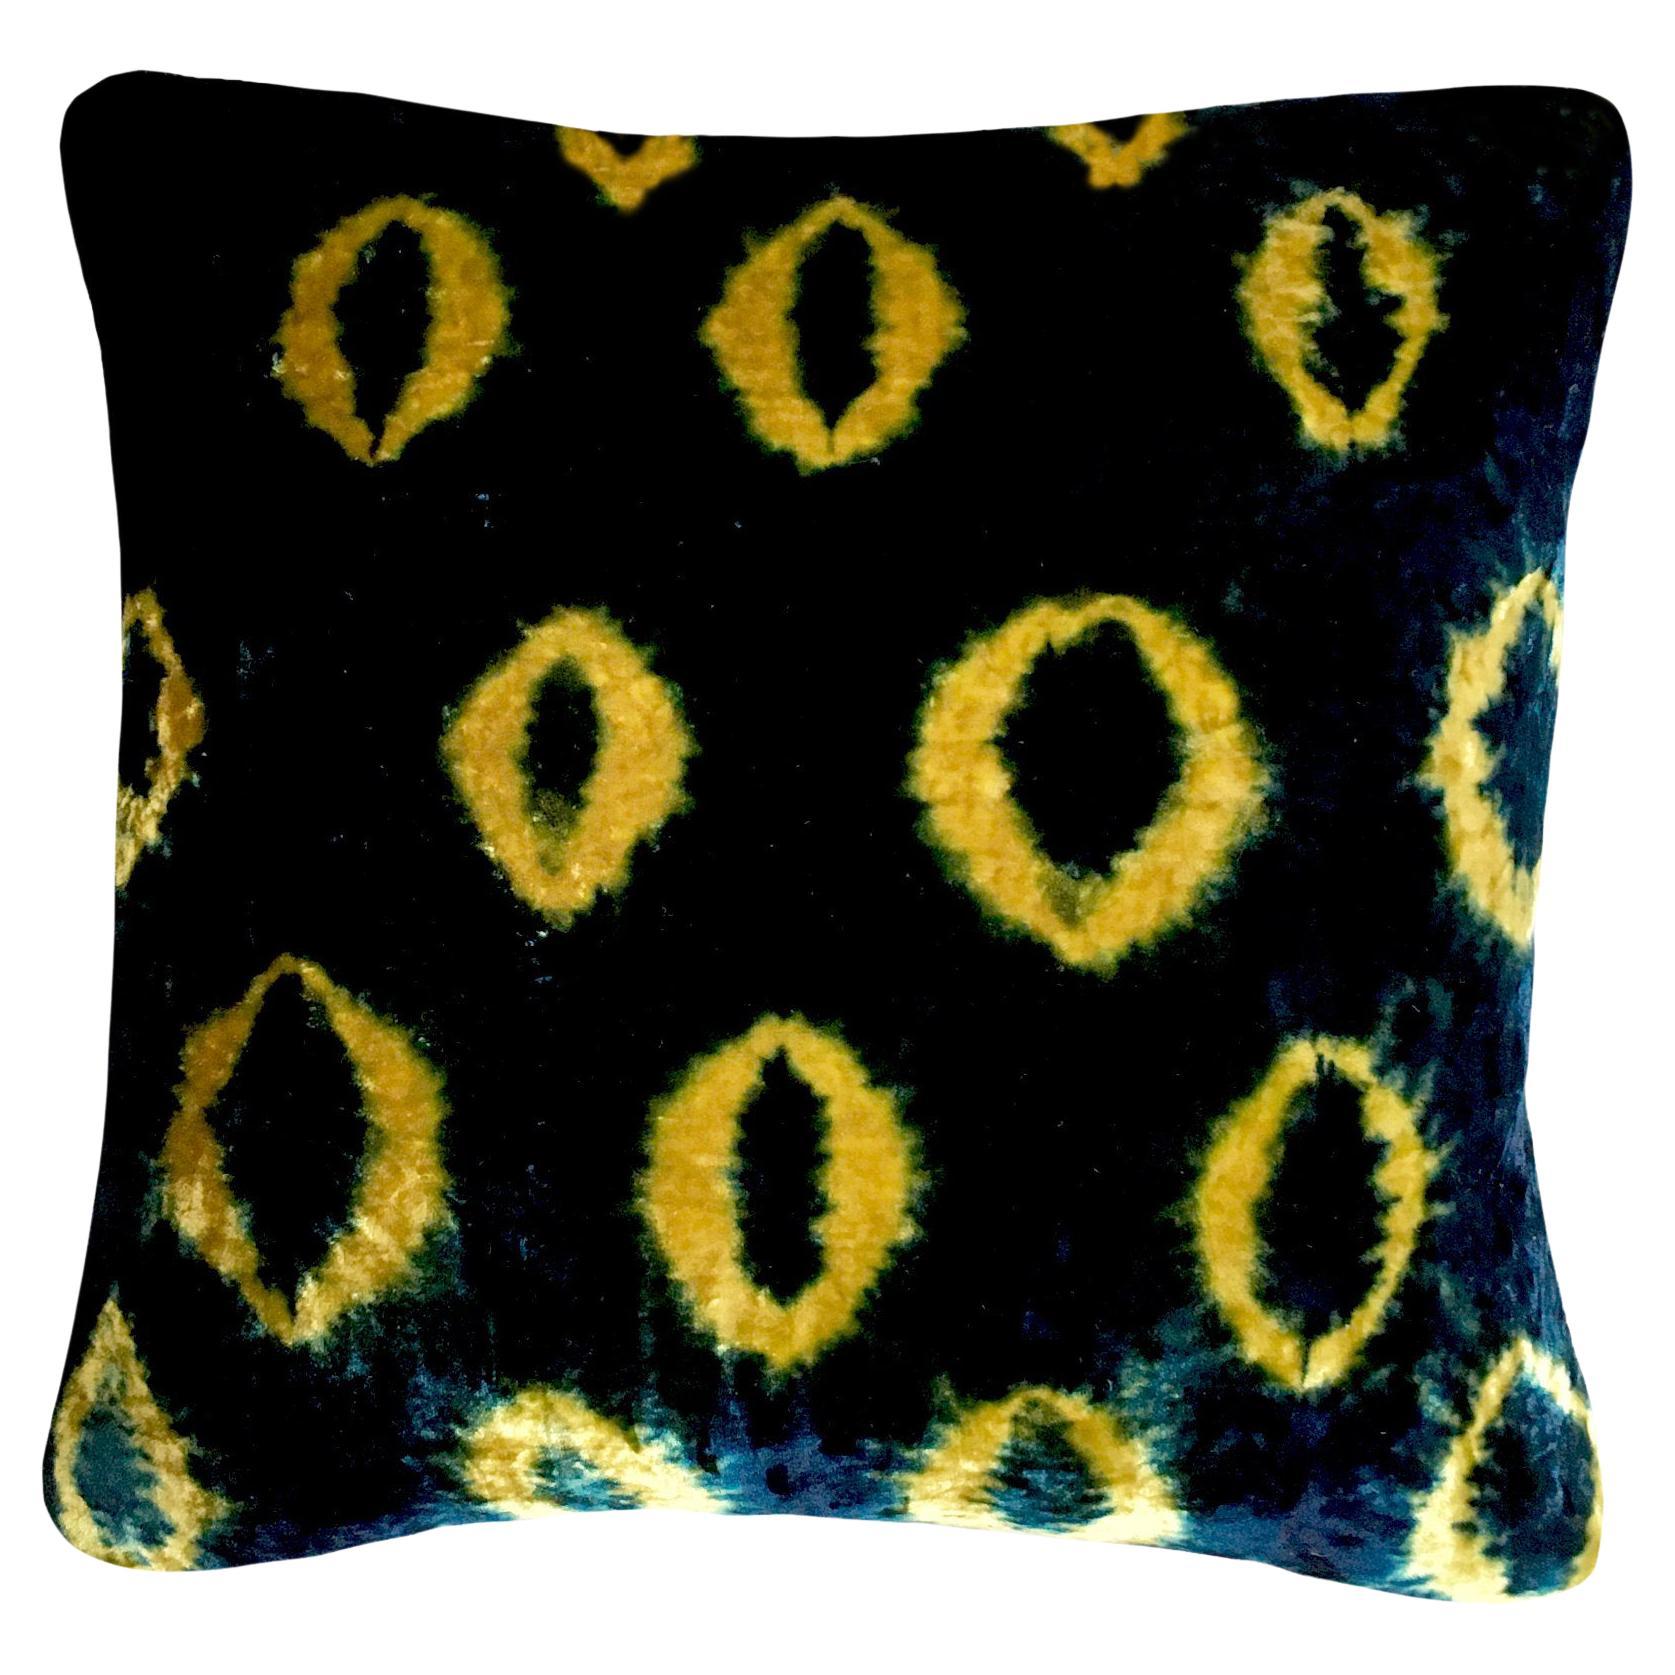 Hand-dyed Velvet Throw Pillow in Yellow Gold & Indigo Blue Ikat Pattern